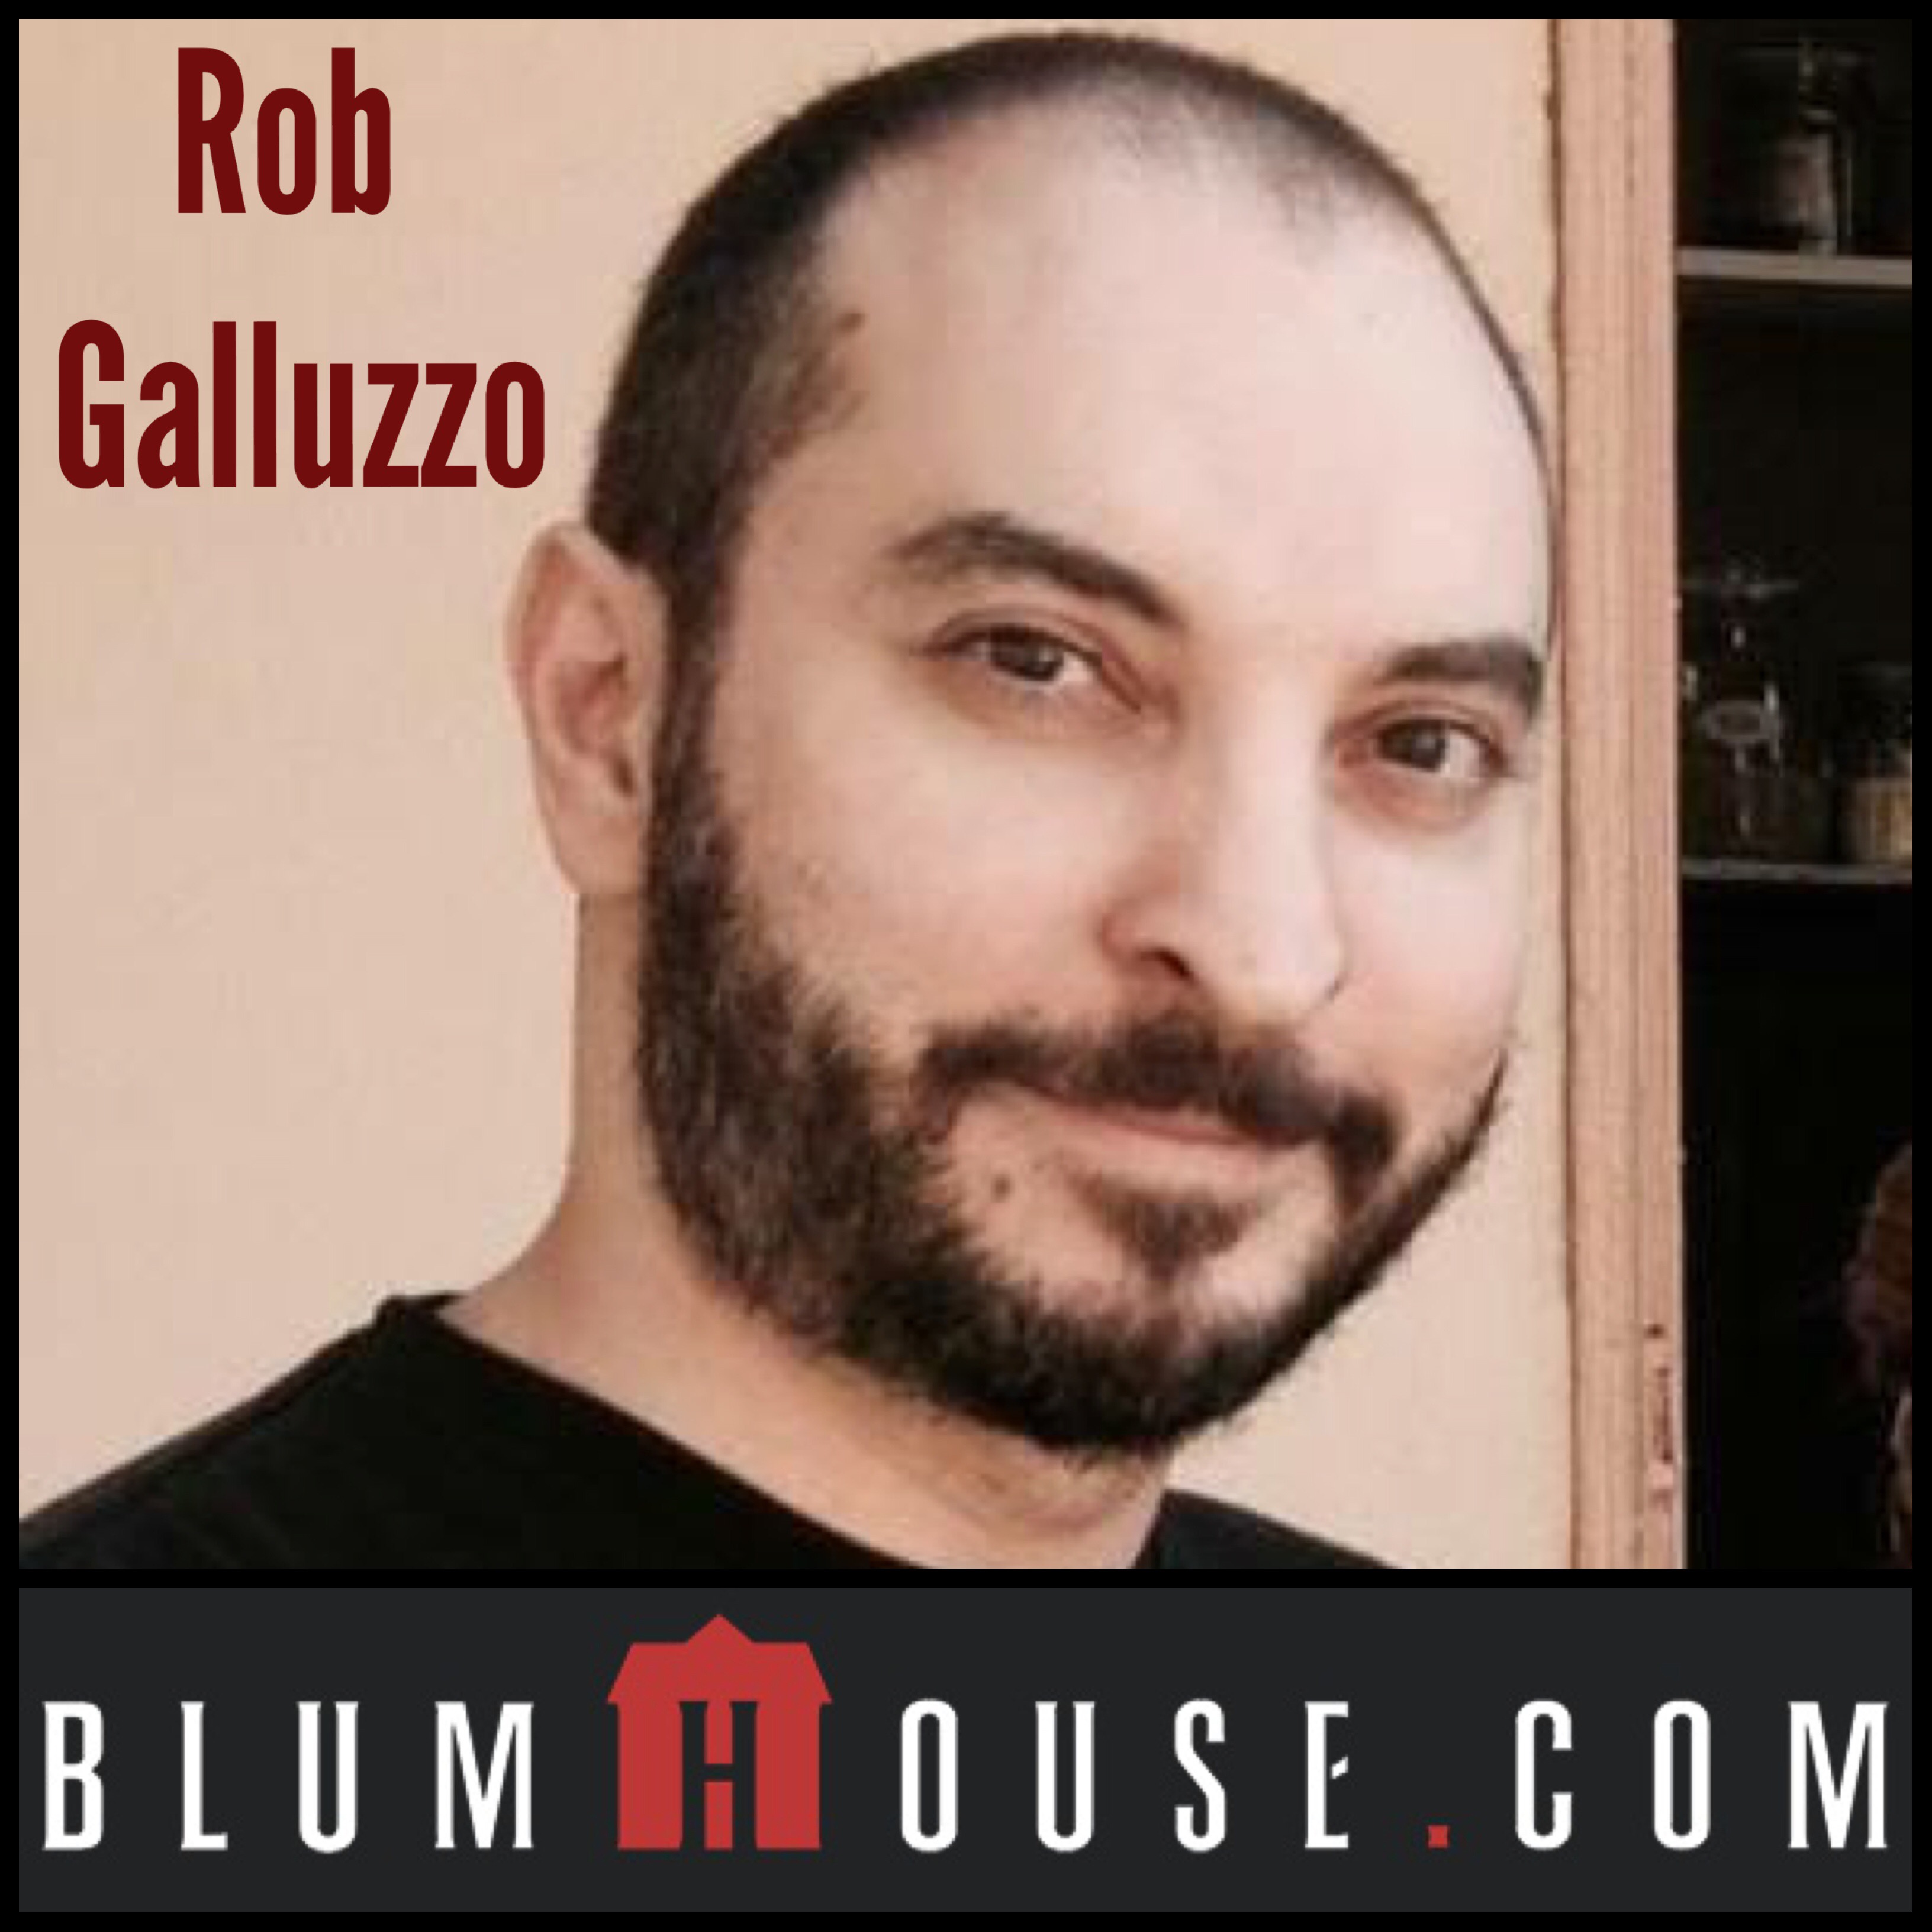 Behind the Screams #7: Talking 'Psycho' with Blumhouse.com's Rob Galluzzo